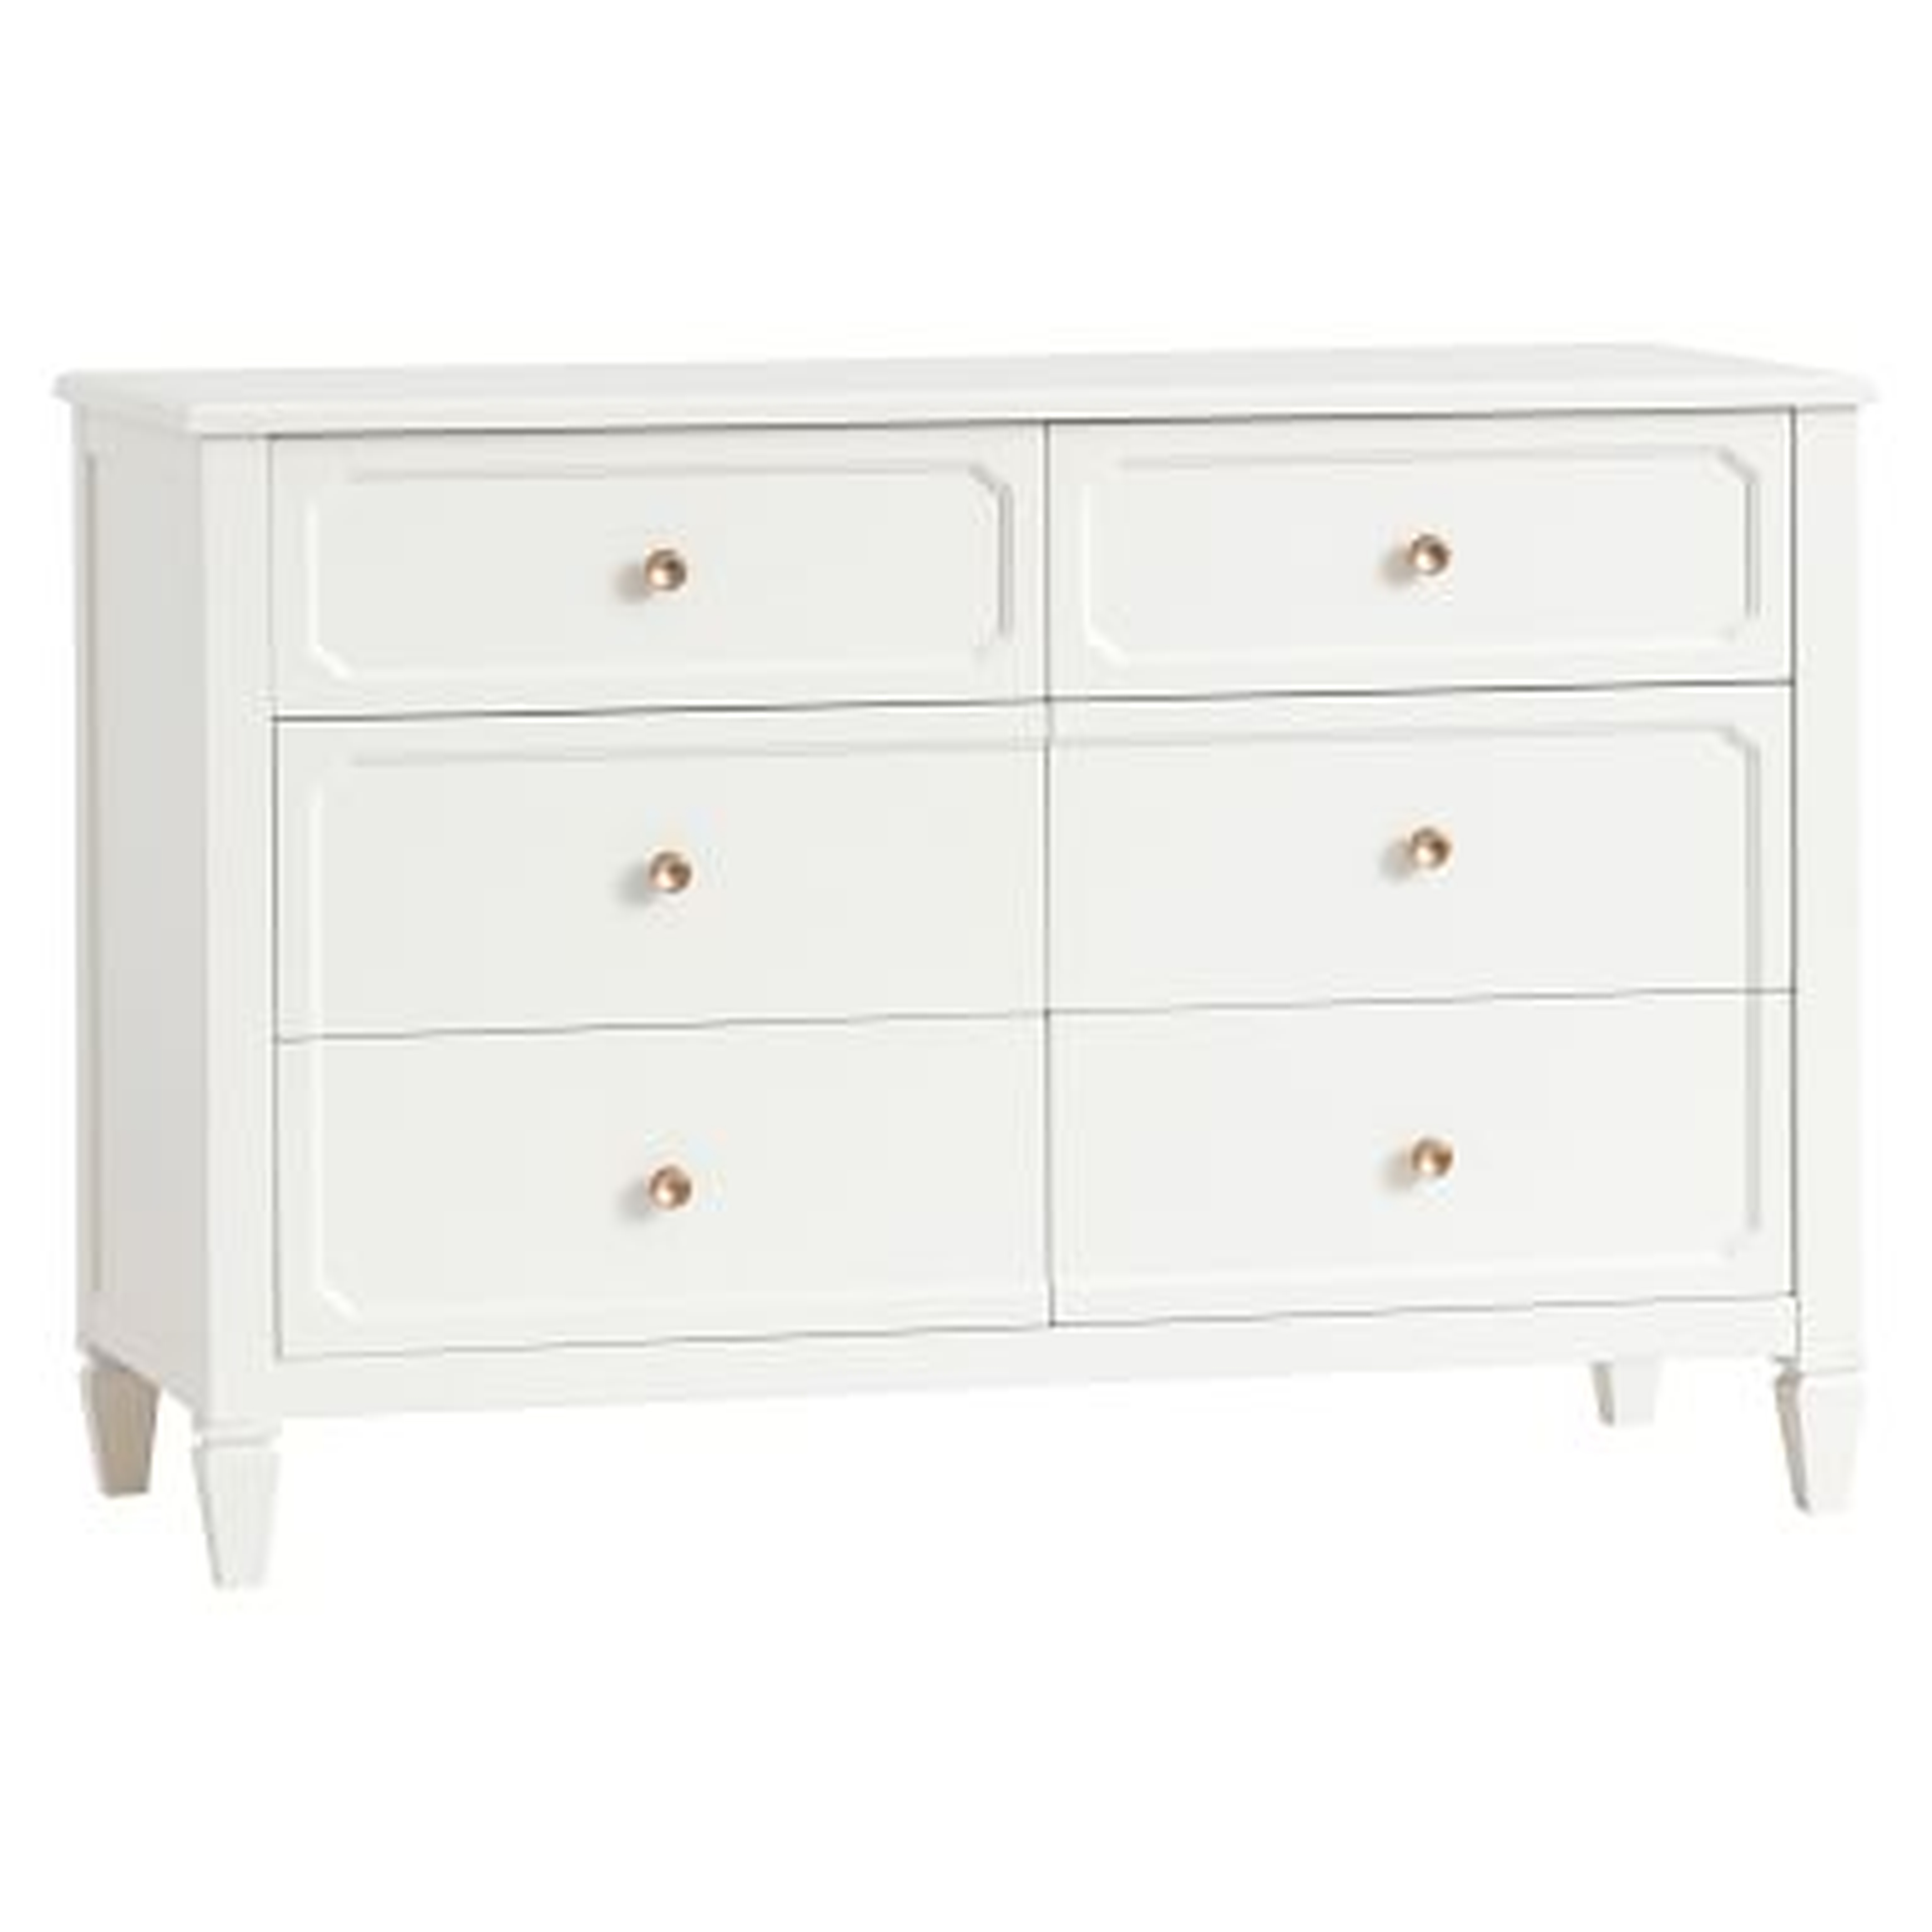 Auburn 6-Drawer Wide Dresser, Simply White - Pottery Barn Teen